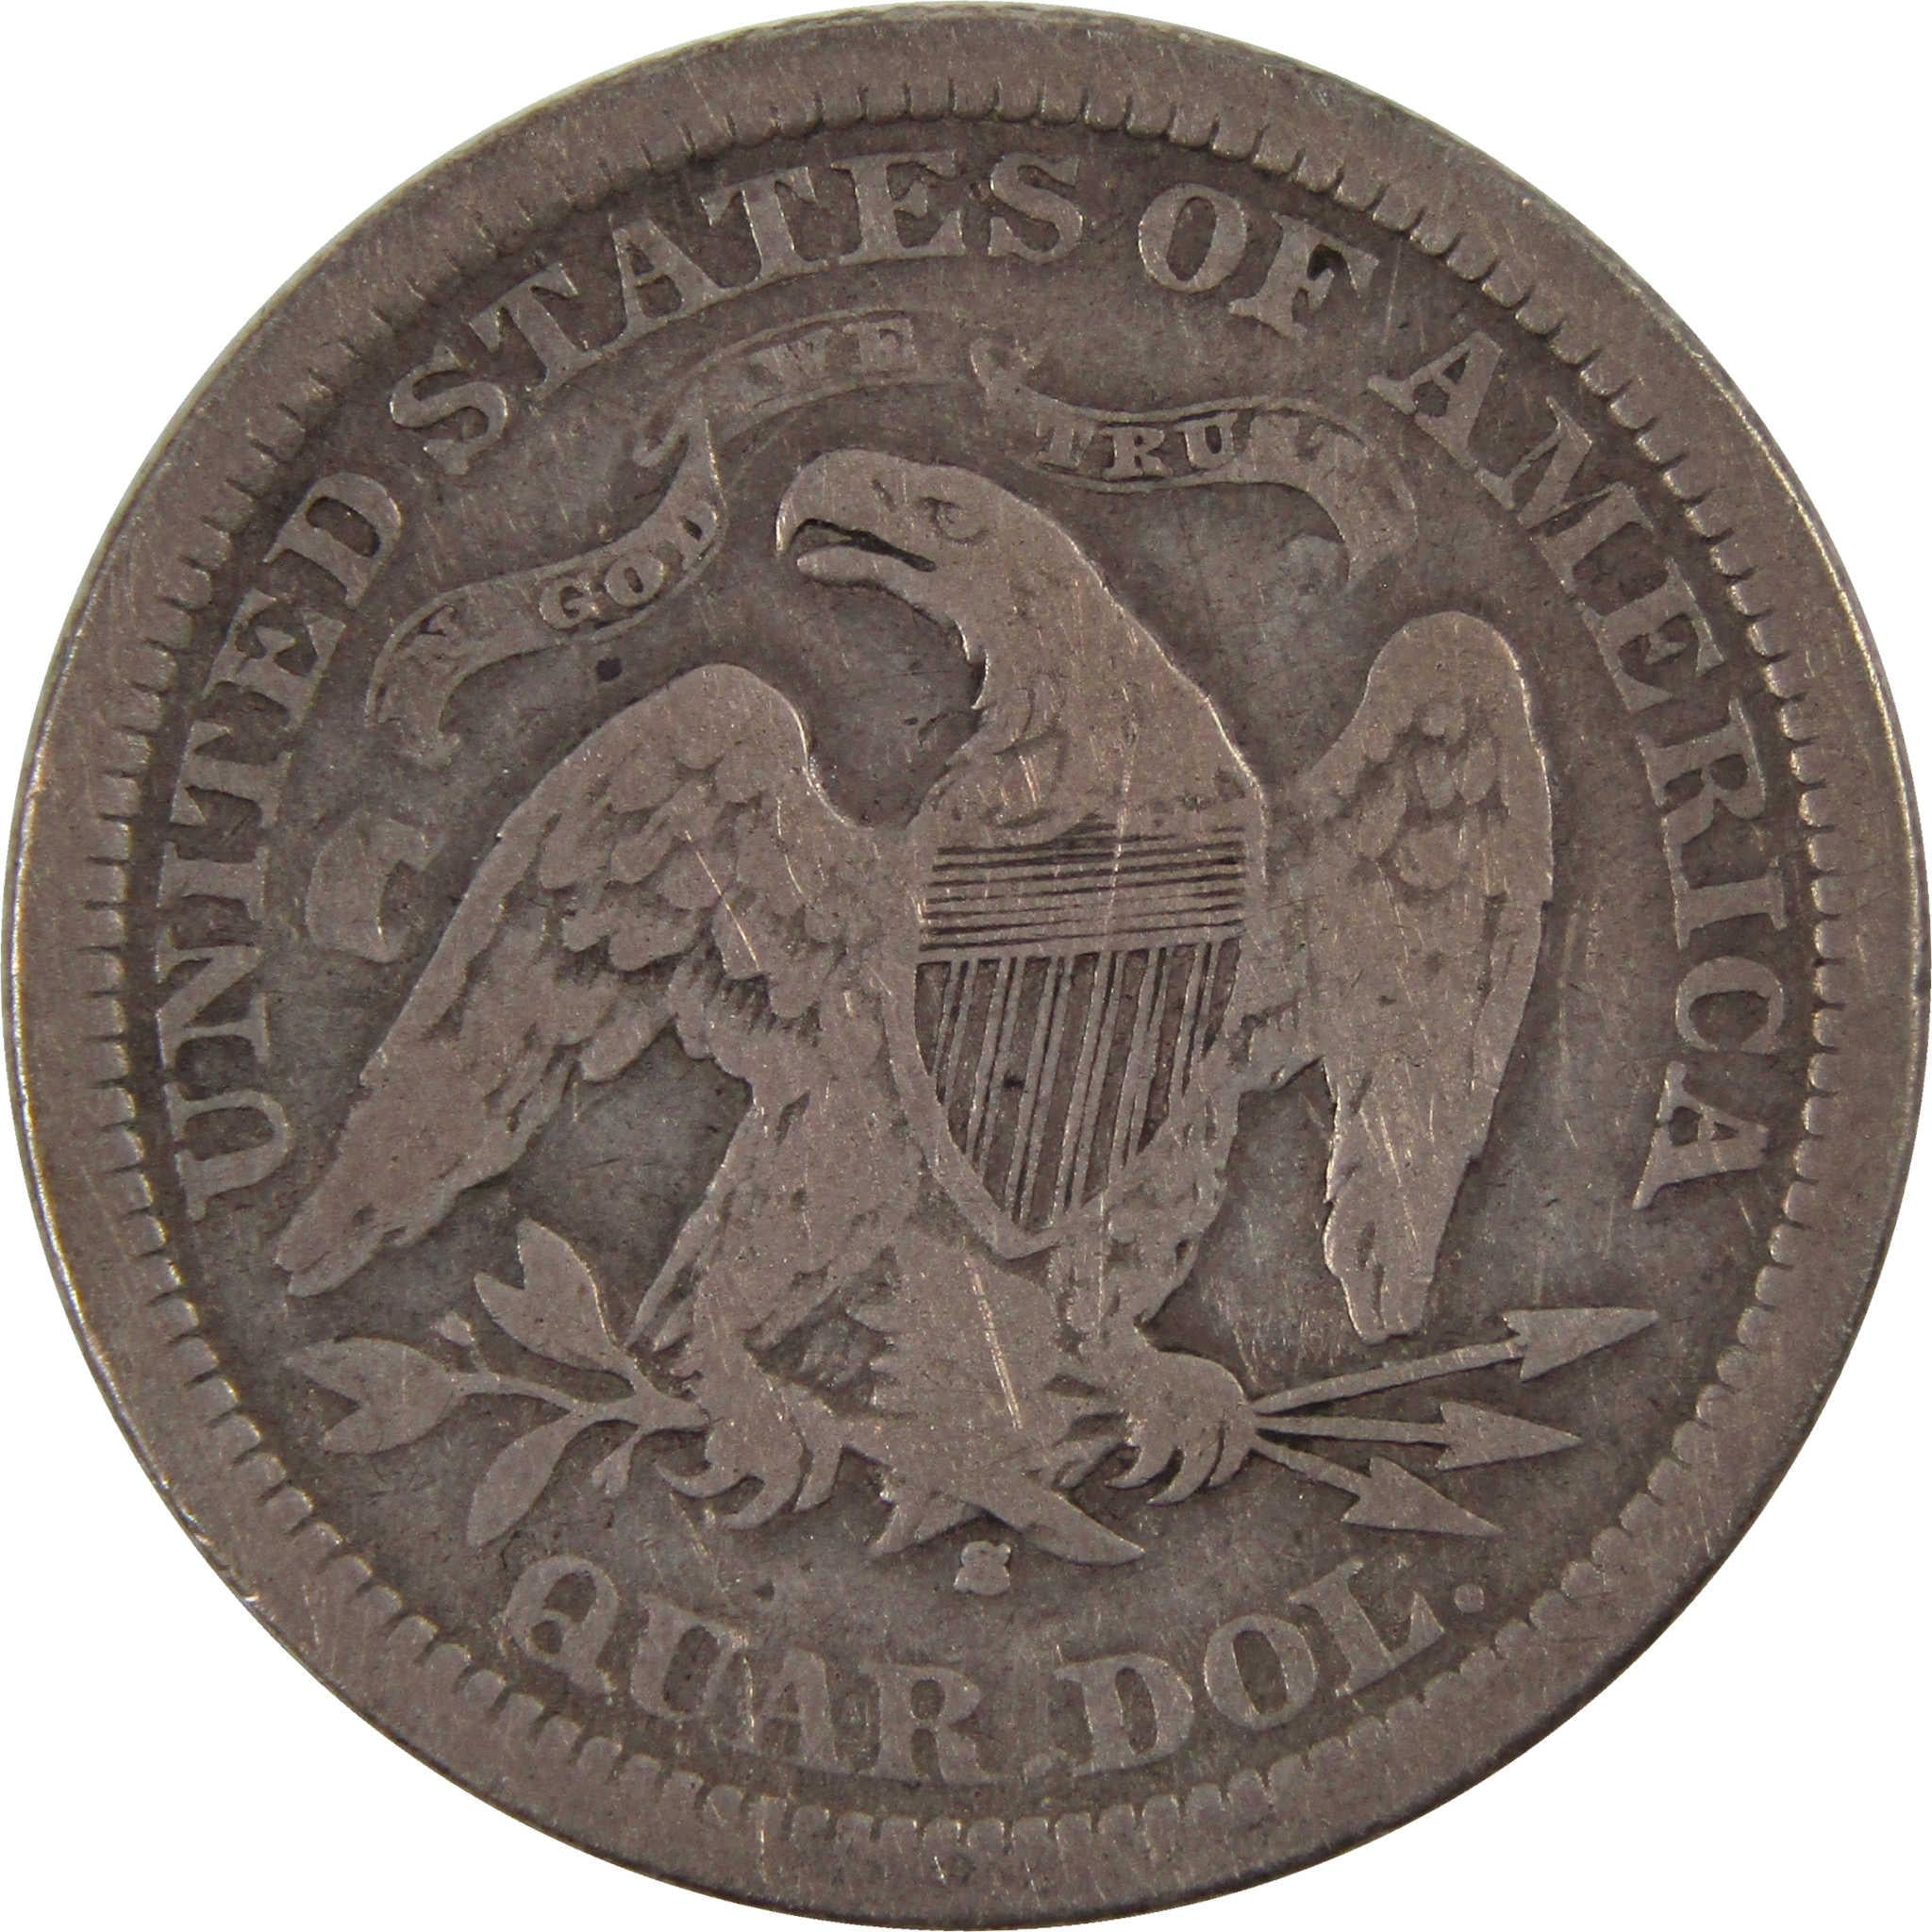 1873 S Seated Liberty Quarter F Fine 90% Silver 25c SKU:I3728